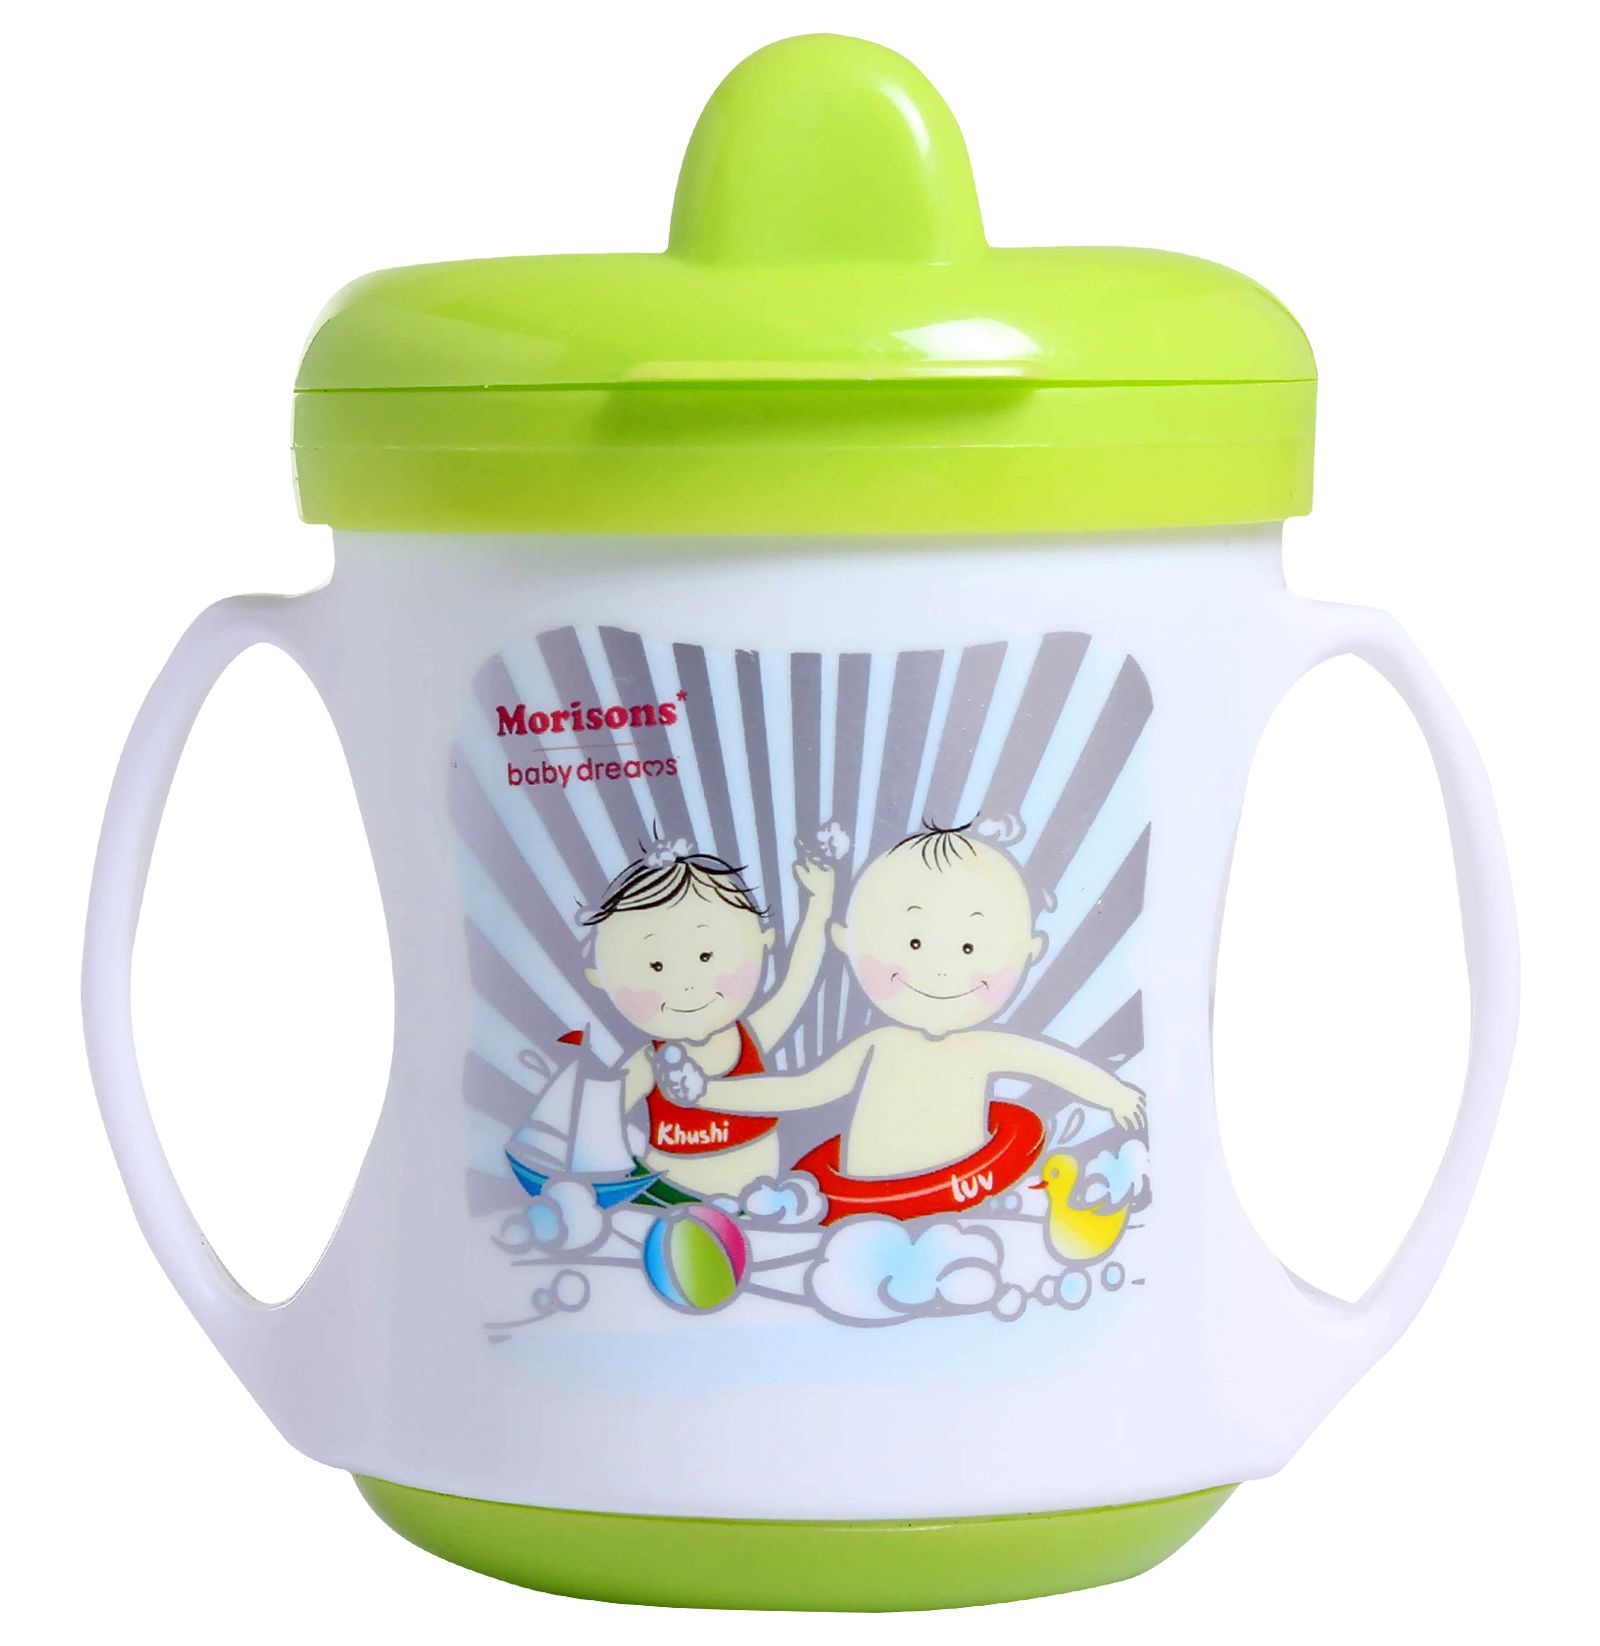 Morisons Baby Dreams - Poochie Feeding Cup